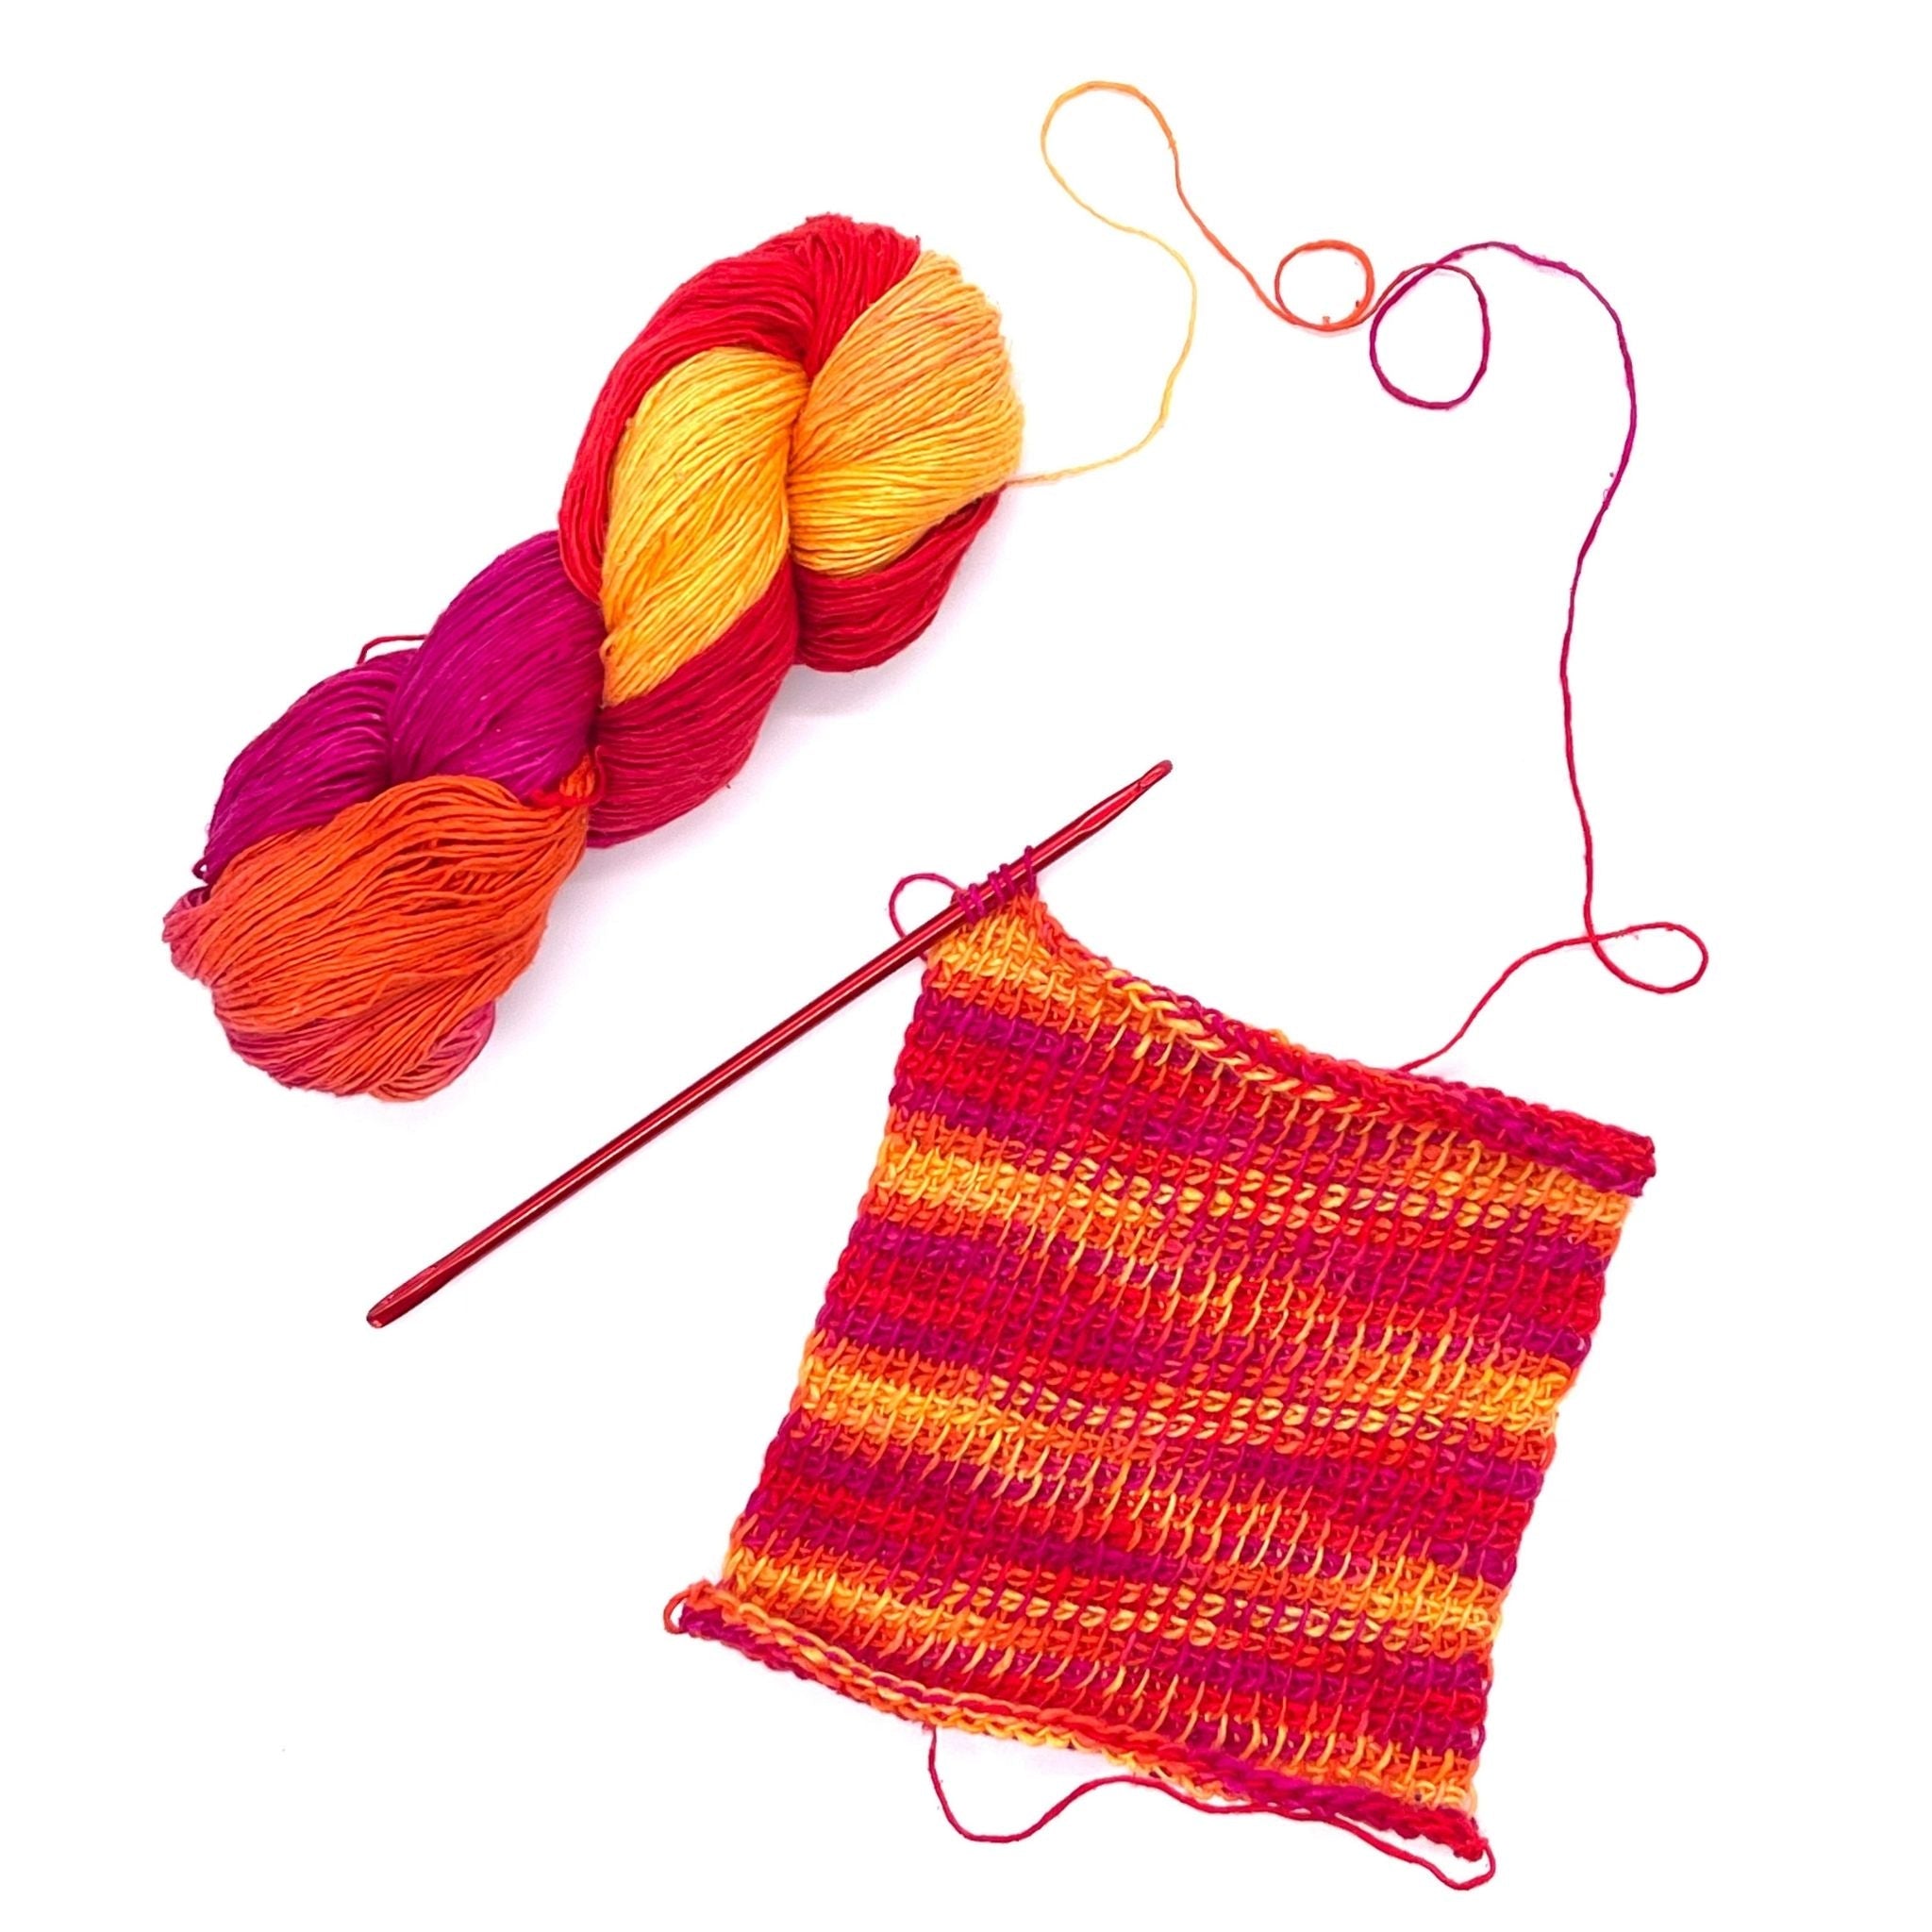 Is Lace Weight Yarn the same as Crochet Thread? – Darn Good Yarn